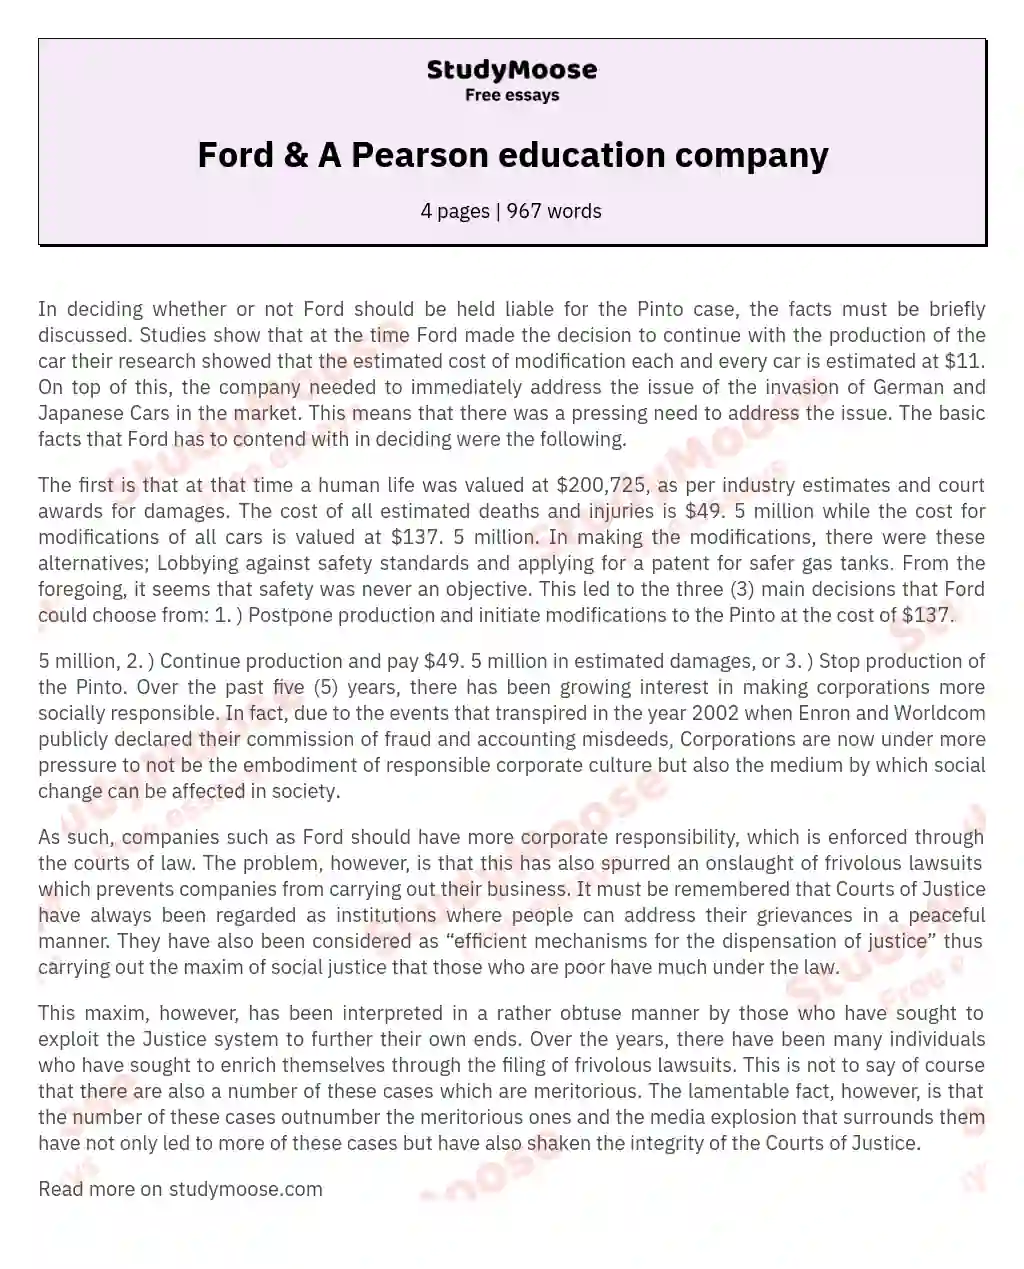 Ford &amp; A Pearson education company essay